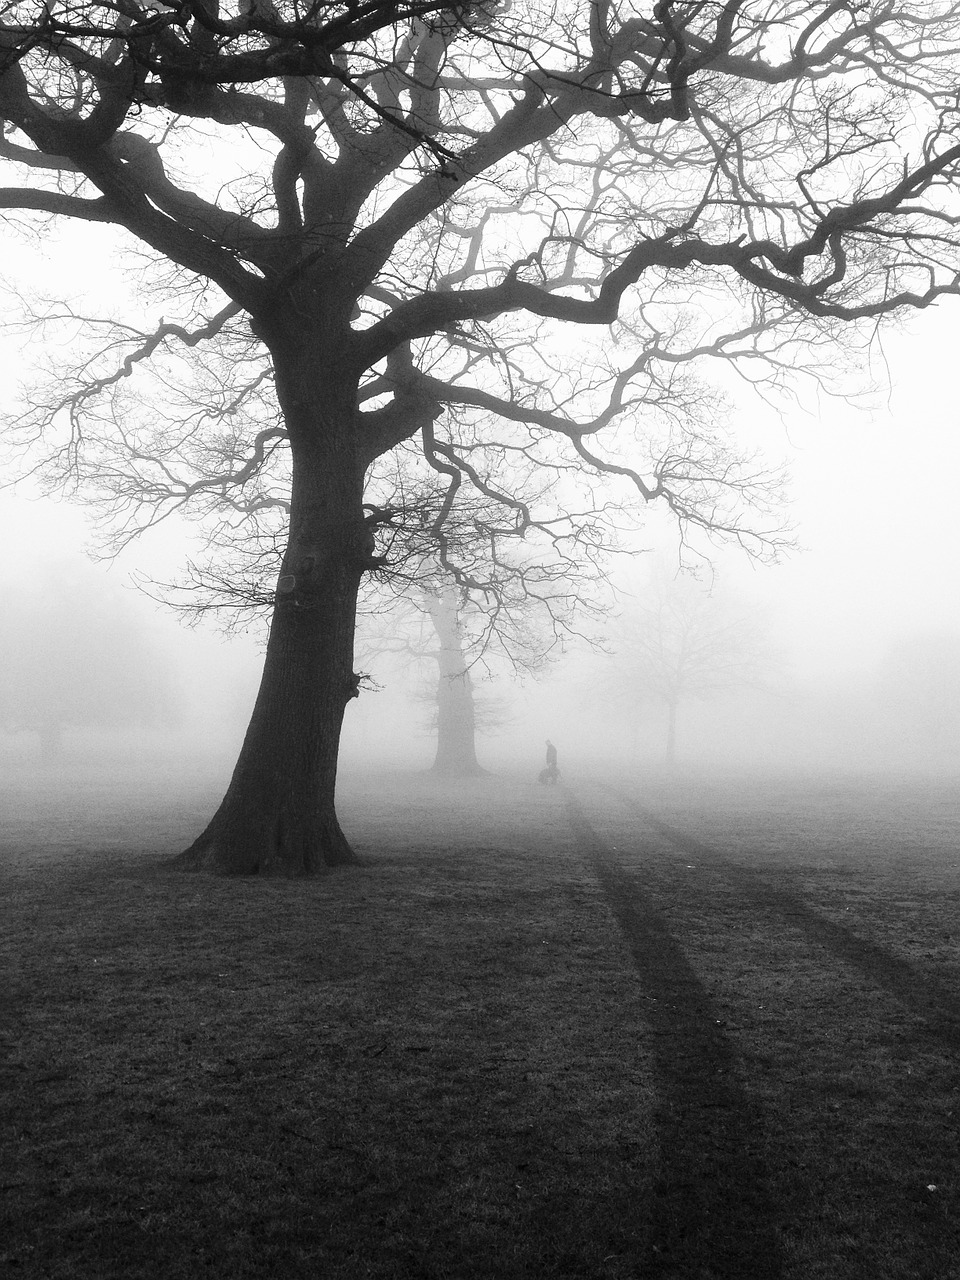 https://pixabay.com/en/trees-mist-fog-eerie-nature-450854/